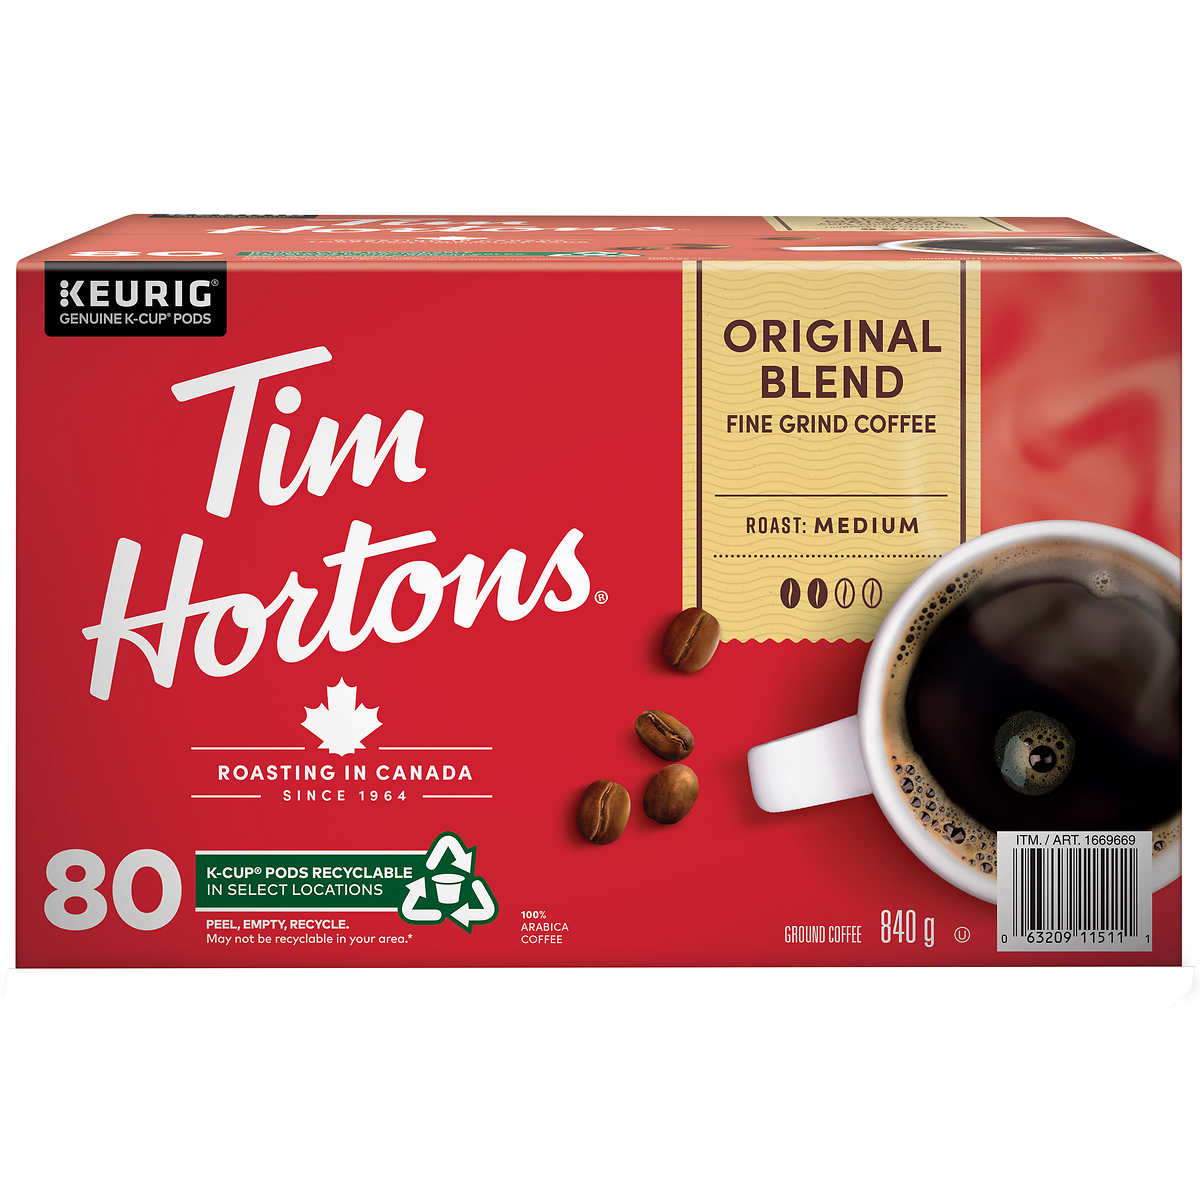 K-Cup Tassimo dosettes de café, 14 unités, original – Tim Hortons